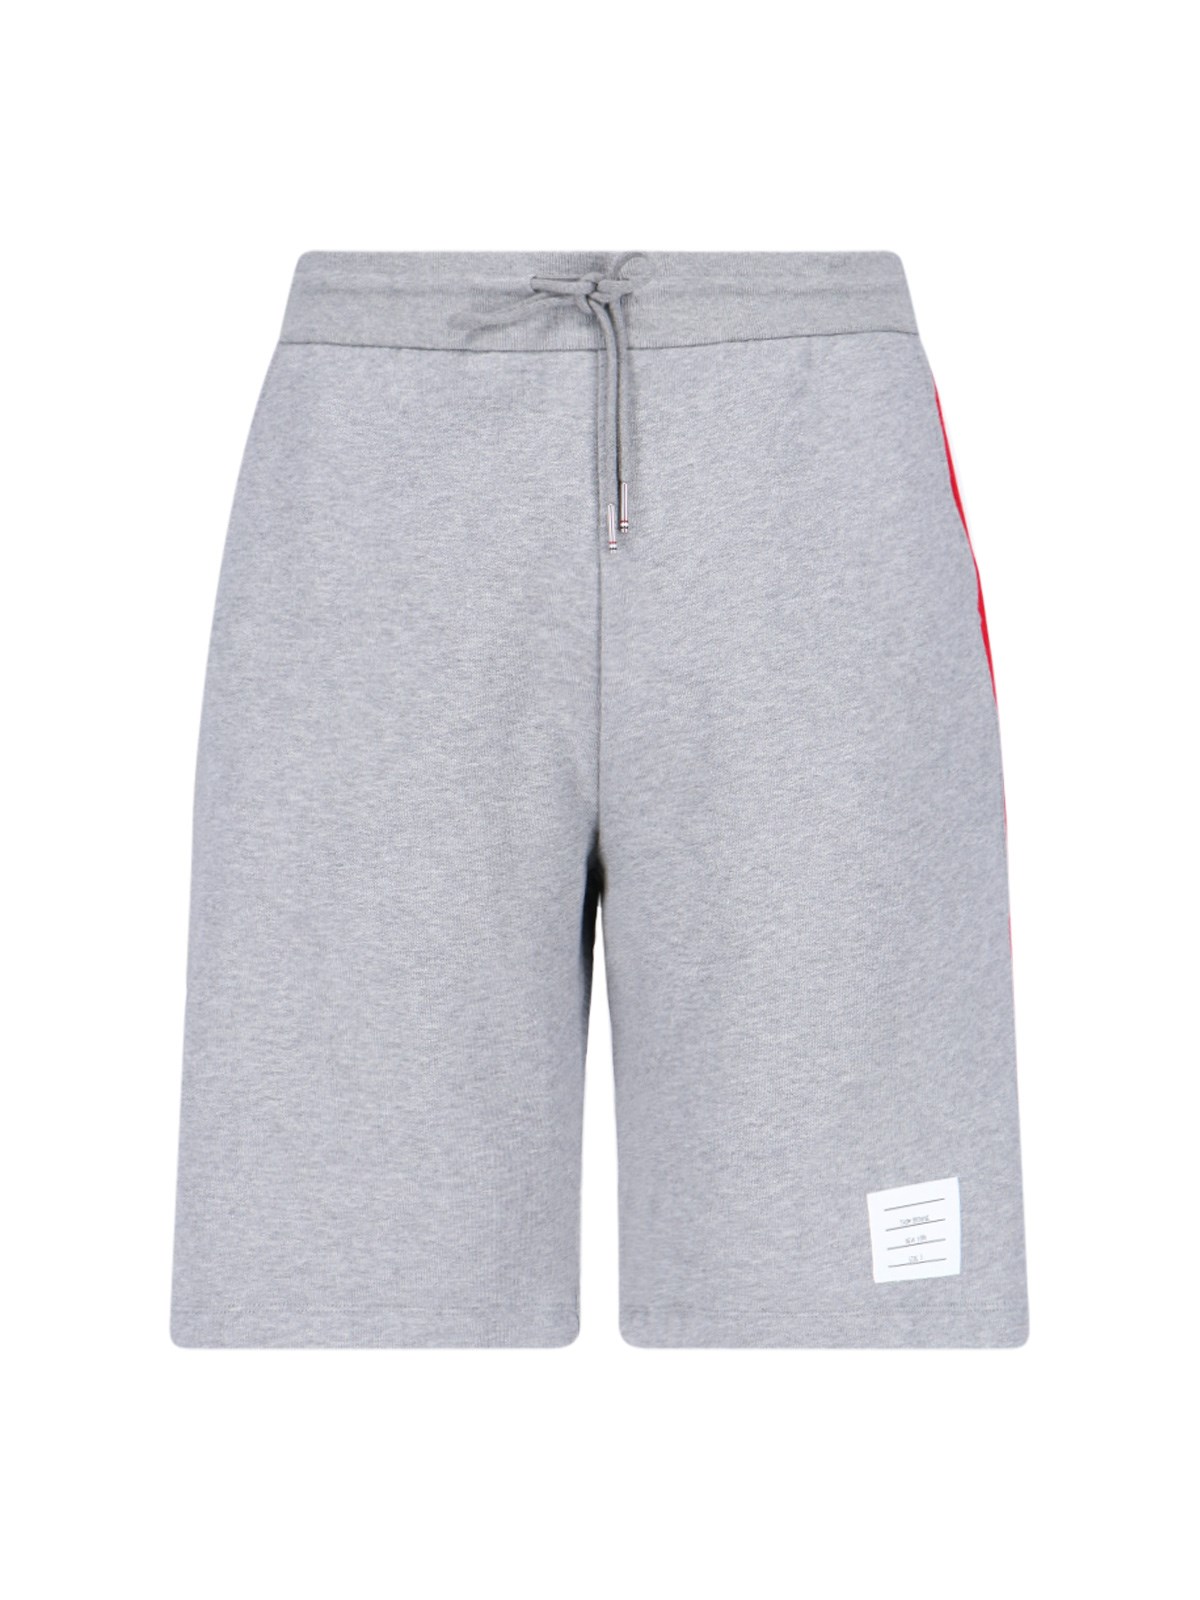 Thom Browne Signature Stripe Track Shorts In Grey